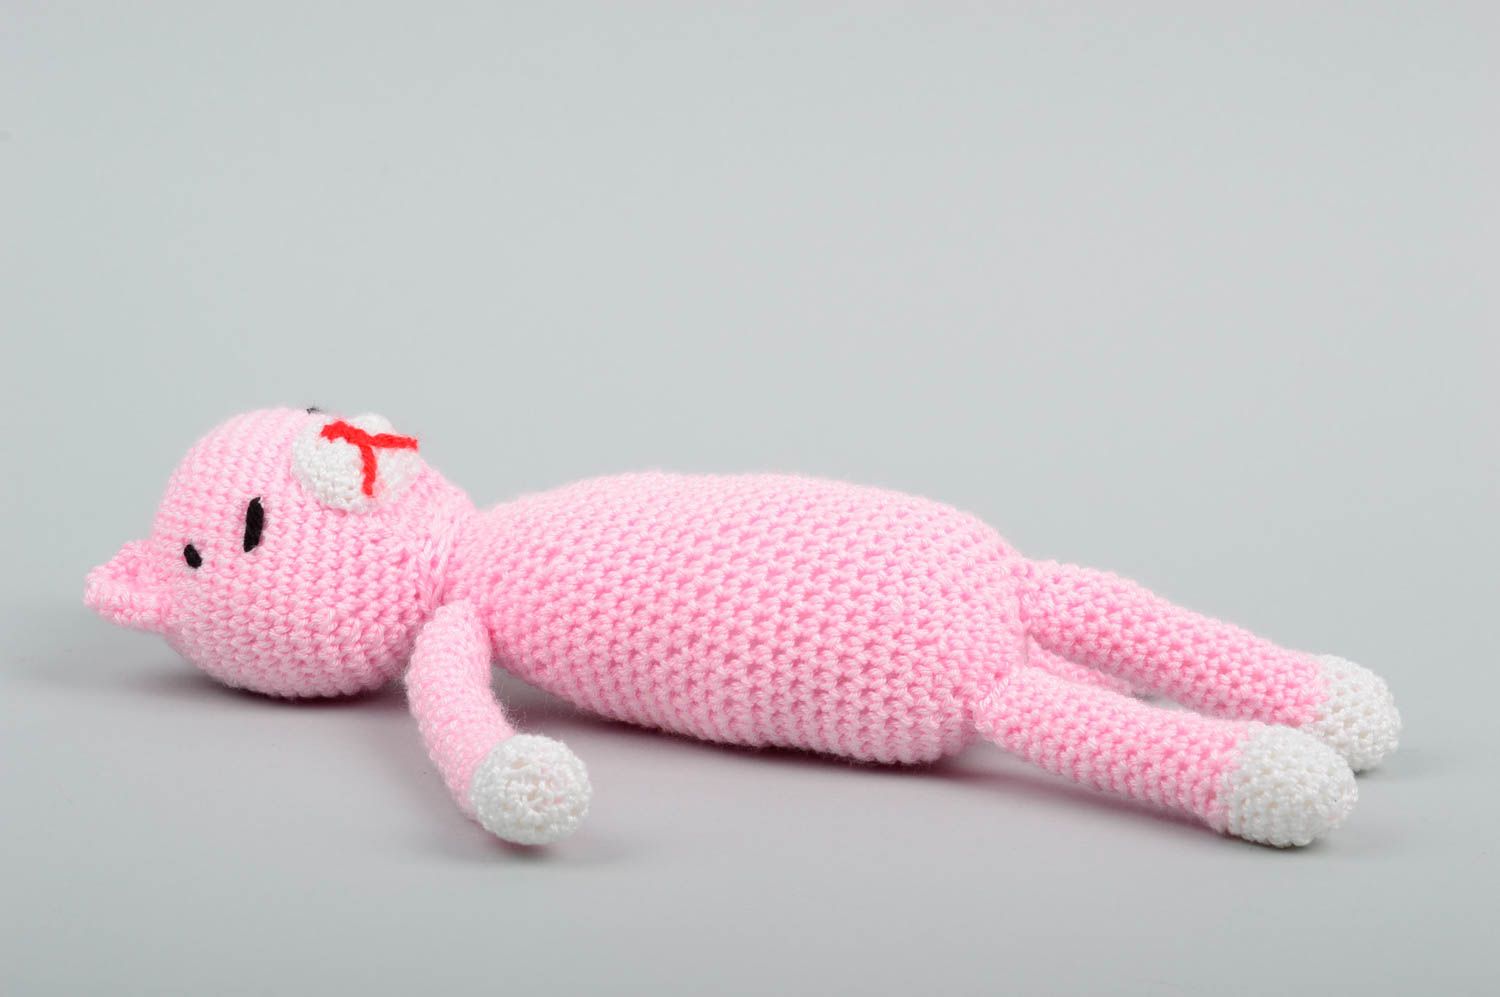 Handmade crocheted soft toy stylish pink toy cute children present kids toy photo 2